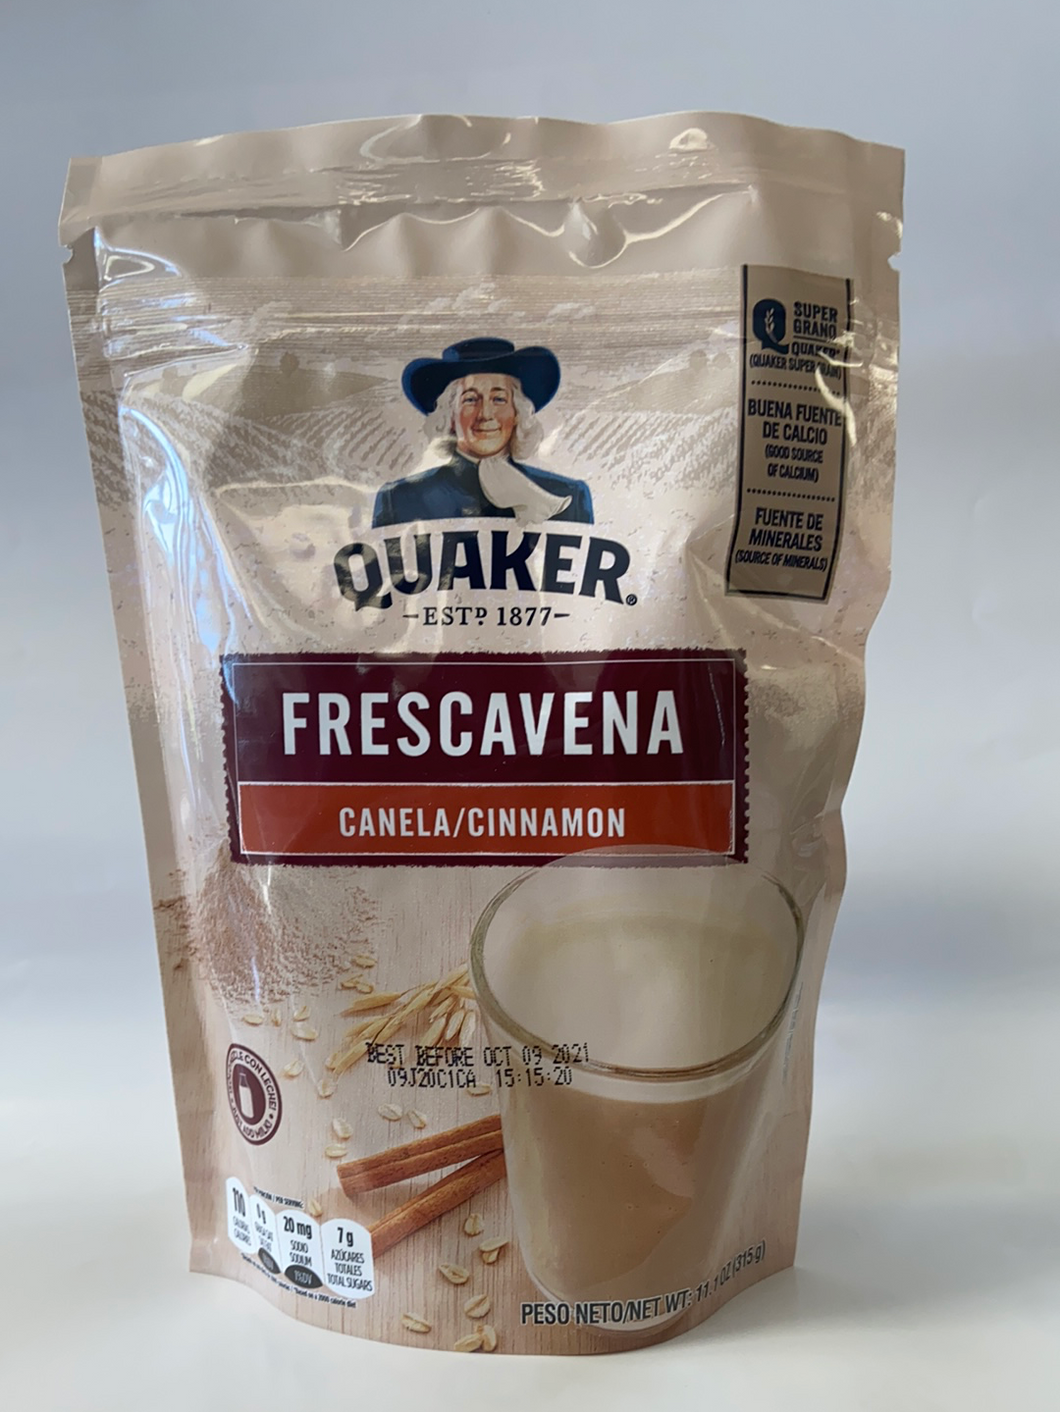 Frescavena, Canela/Cinnamon, Quaker